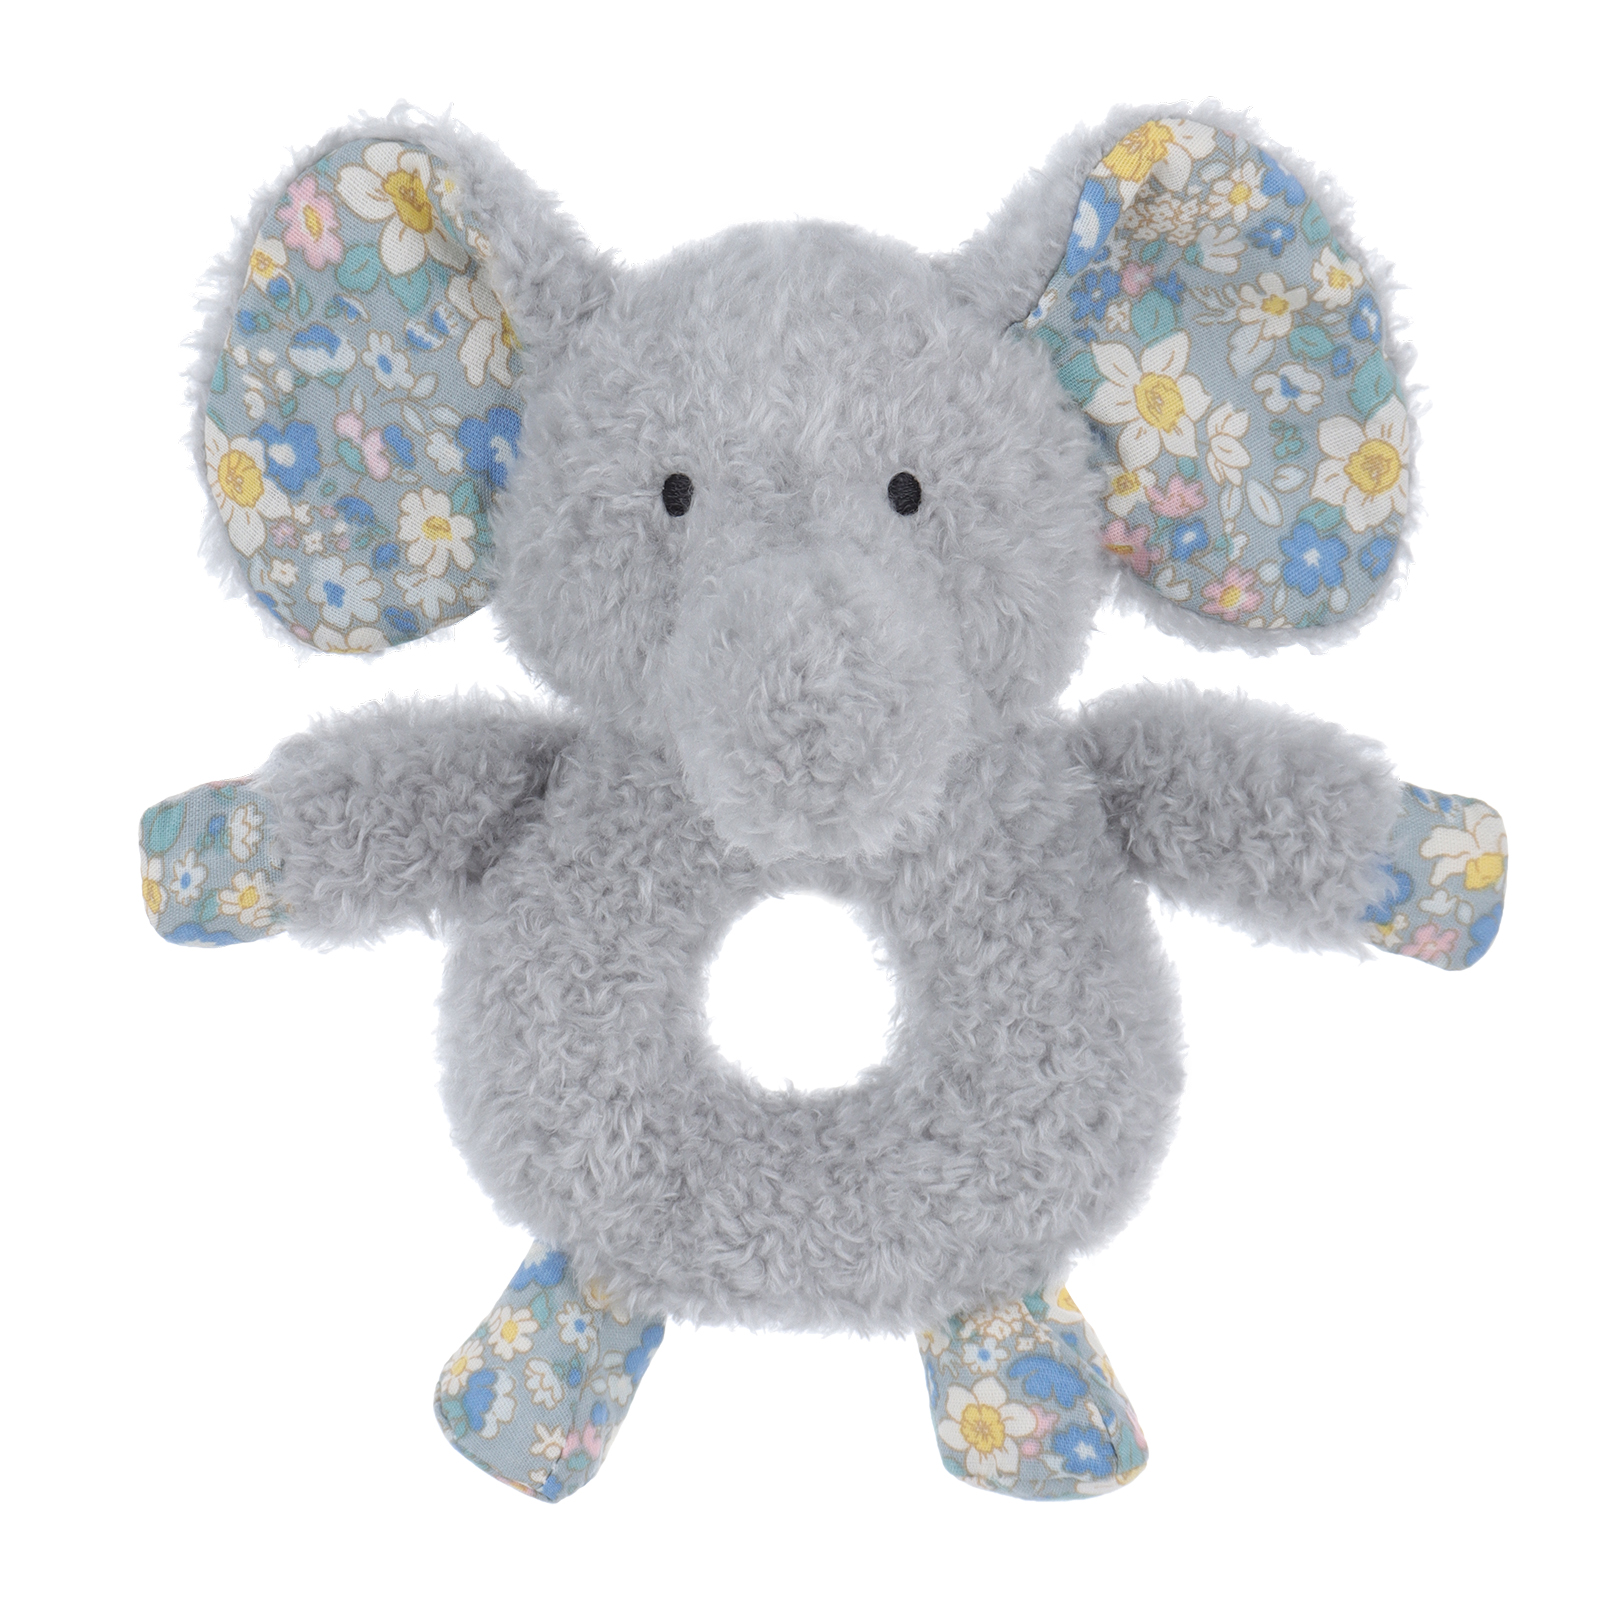 Apricot Lamb ra flower elephant-gray Stuffed Animal Soft Plush Toys